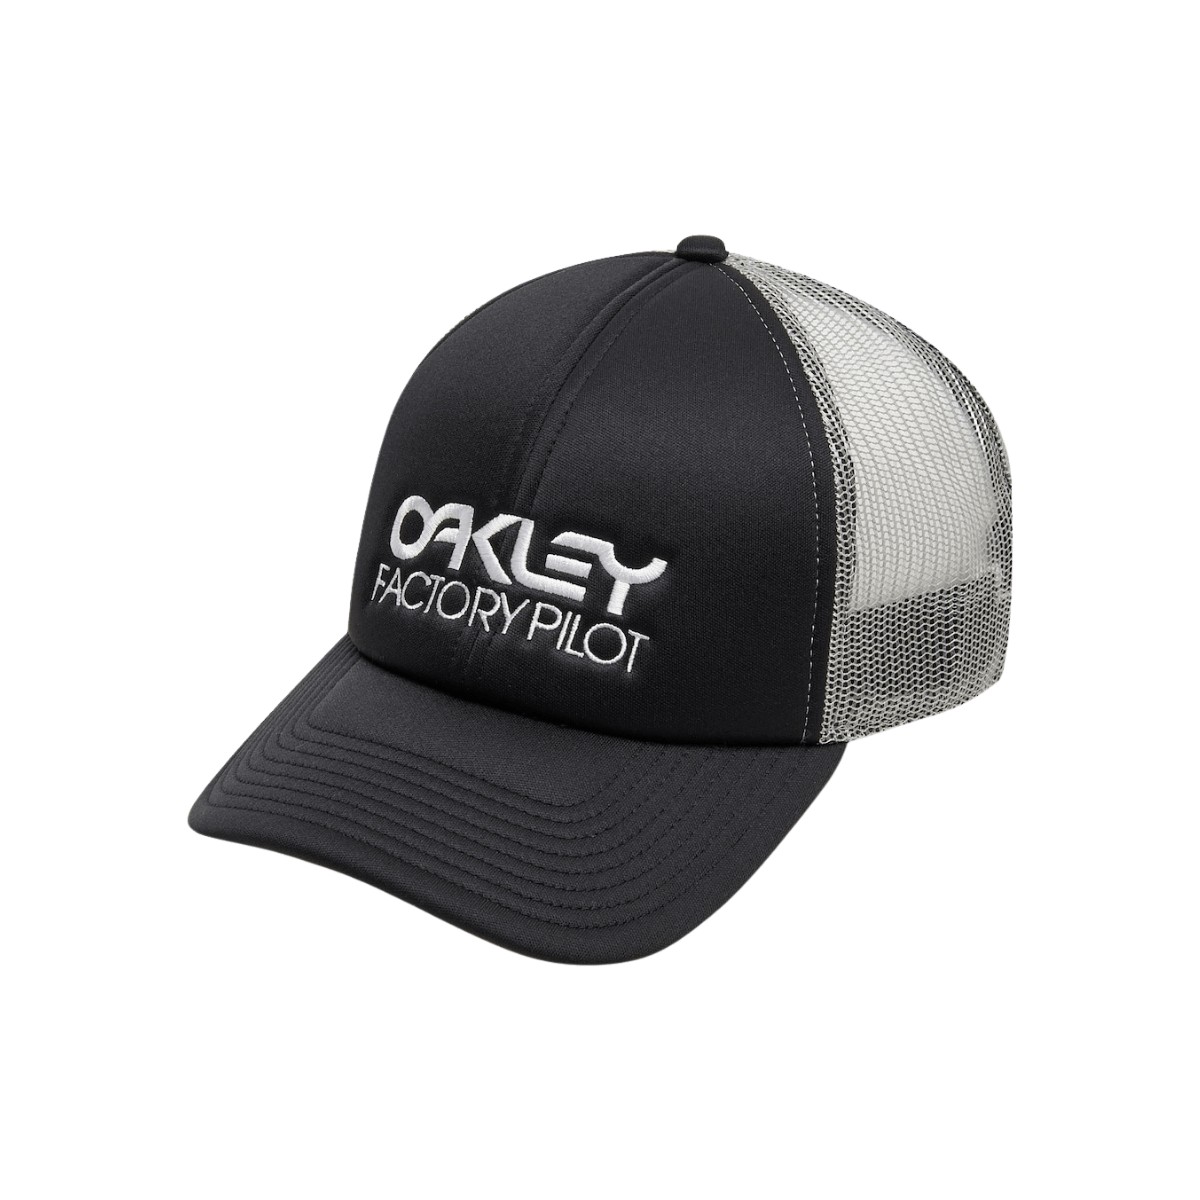 Photos - Bike Accessories Oakley Factory Pilot Trucker Hat Black Cap FOS900510-02E 